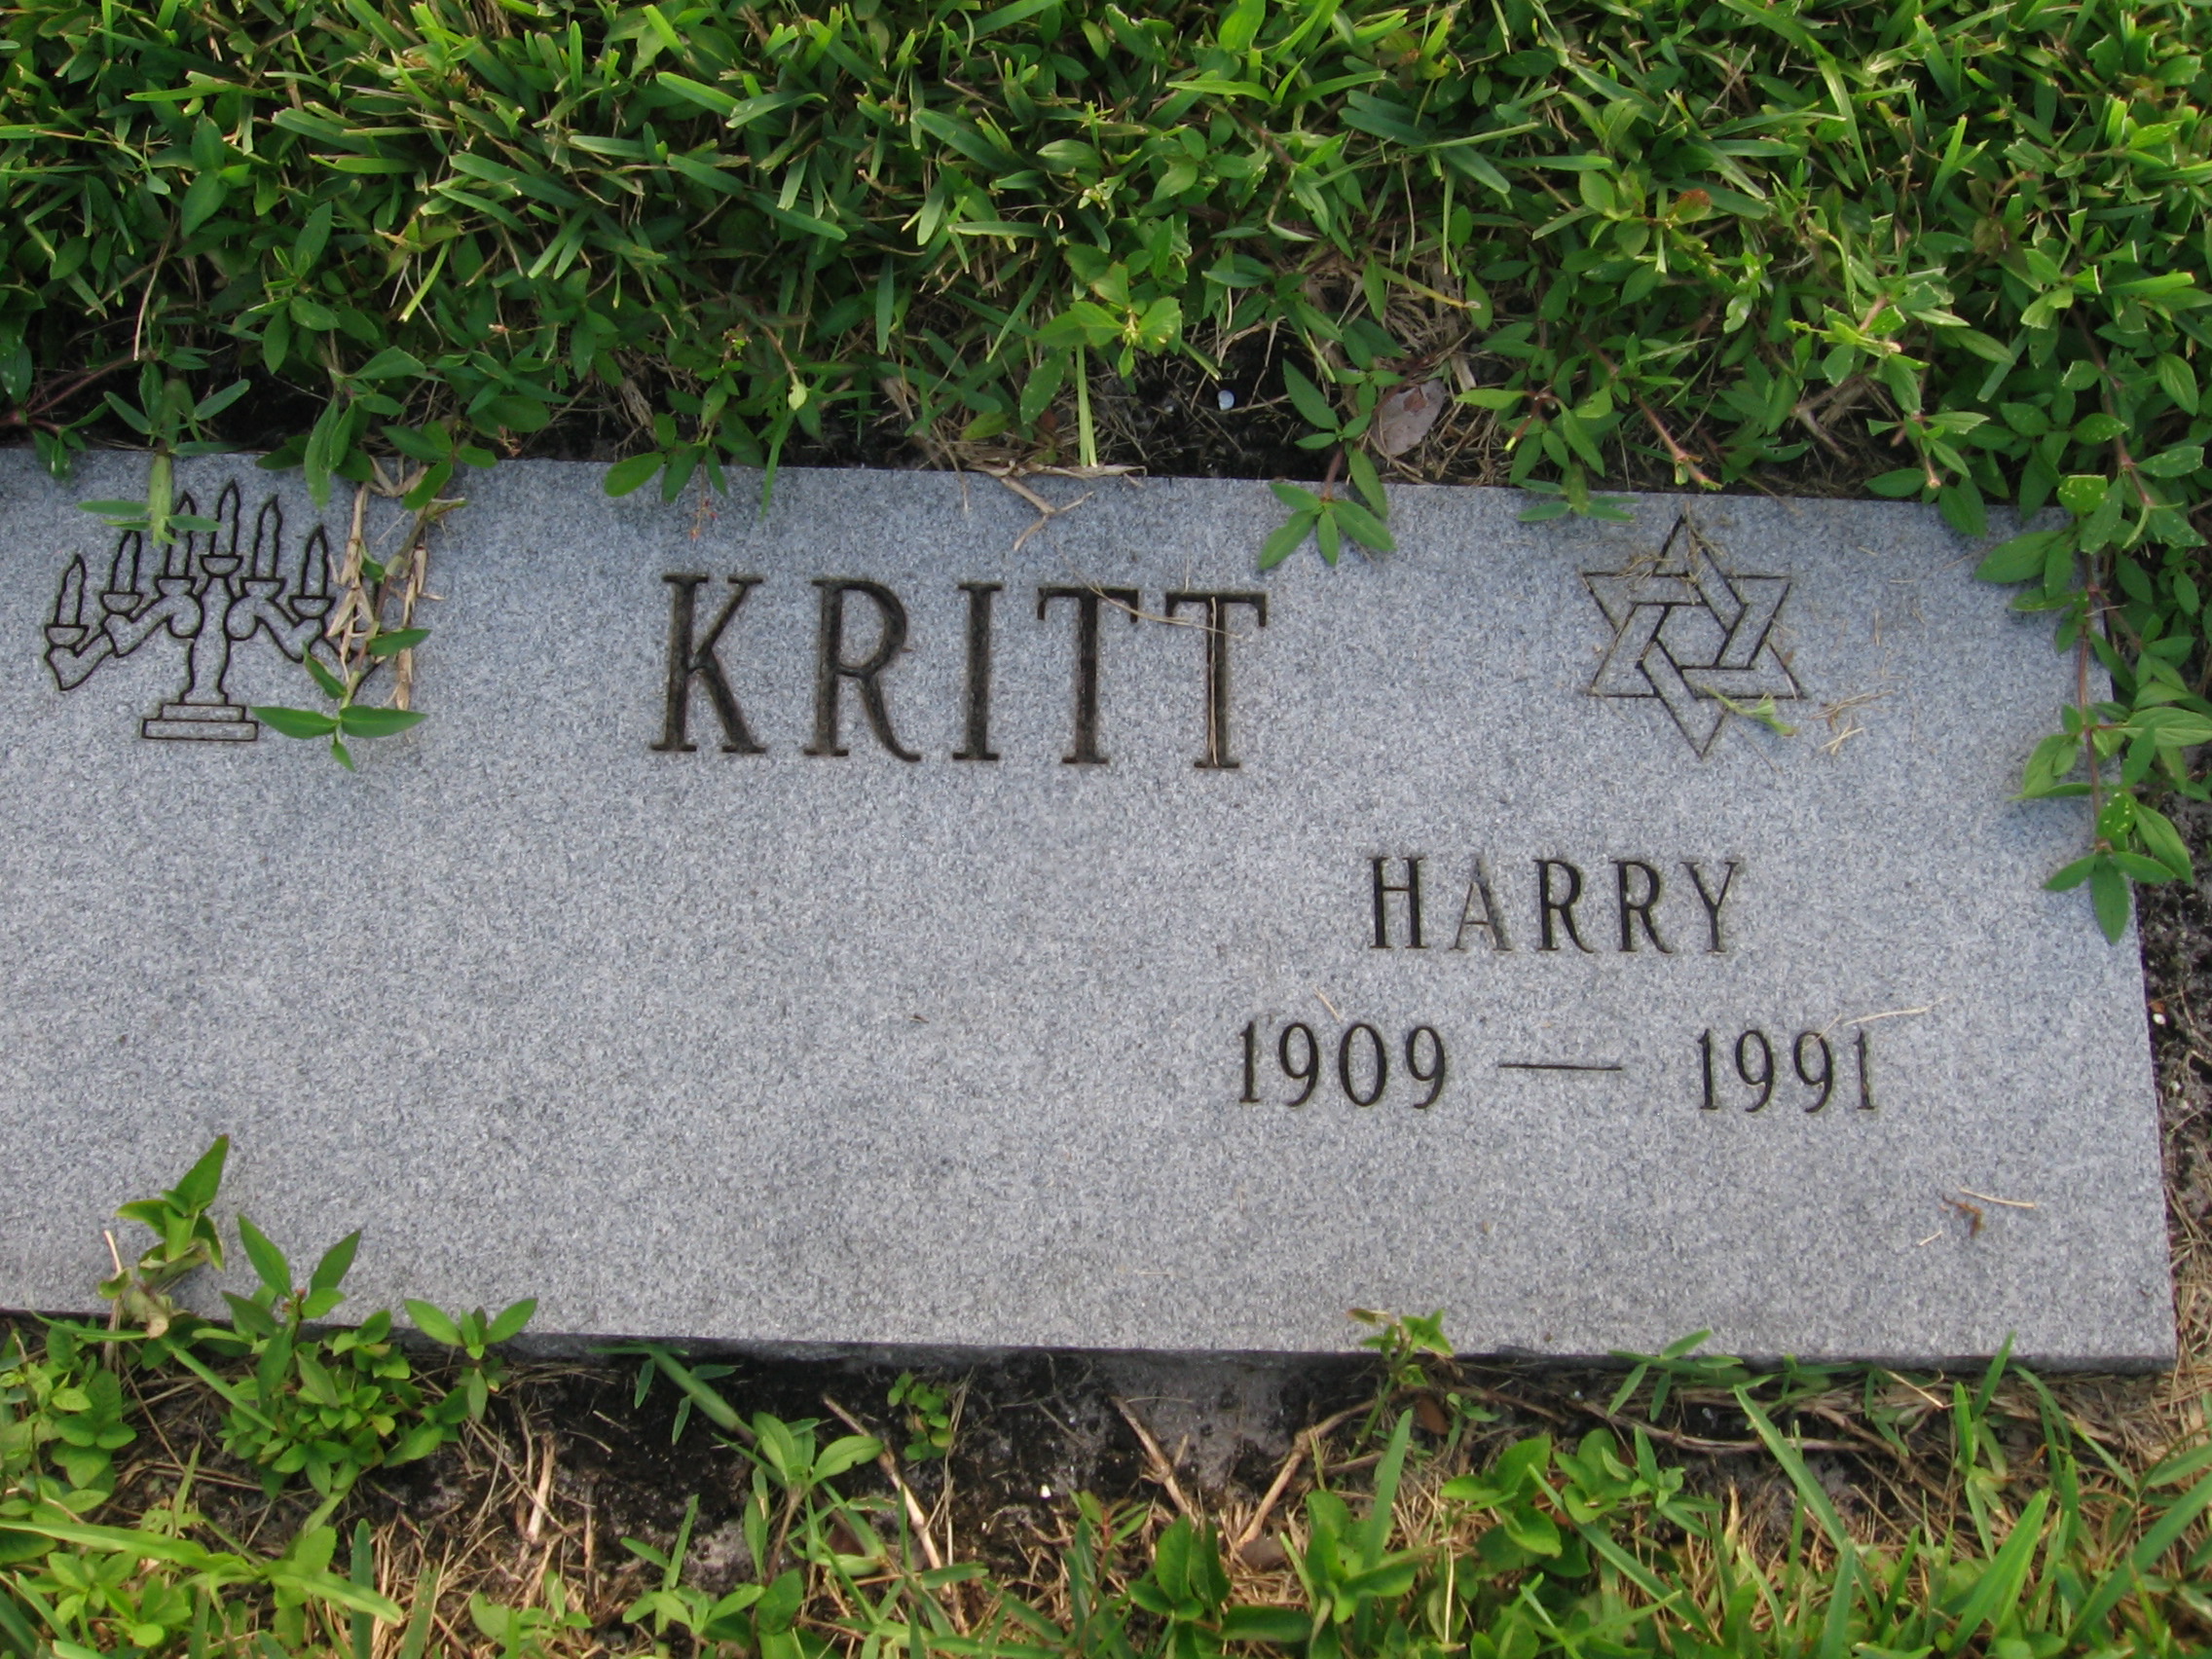 Harry Kritt